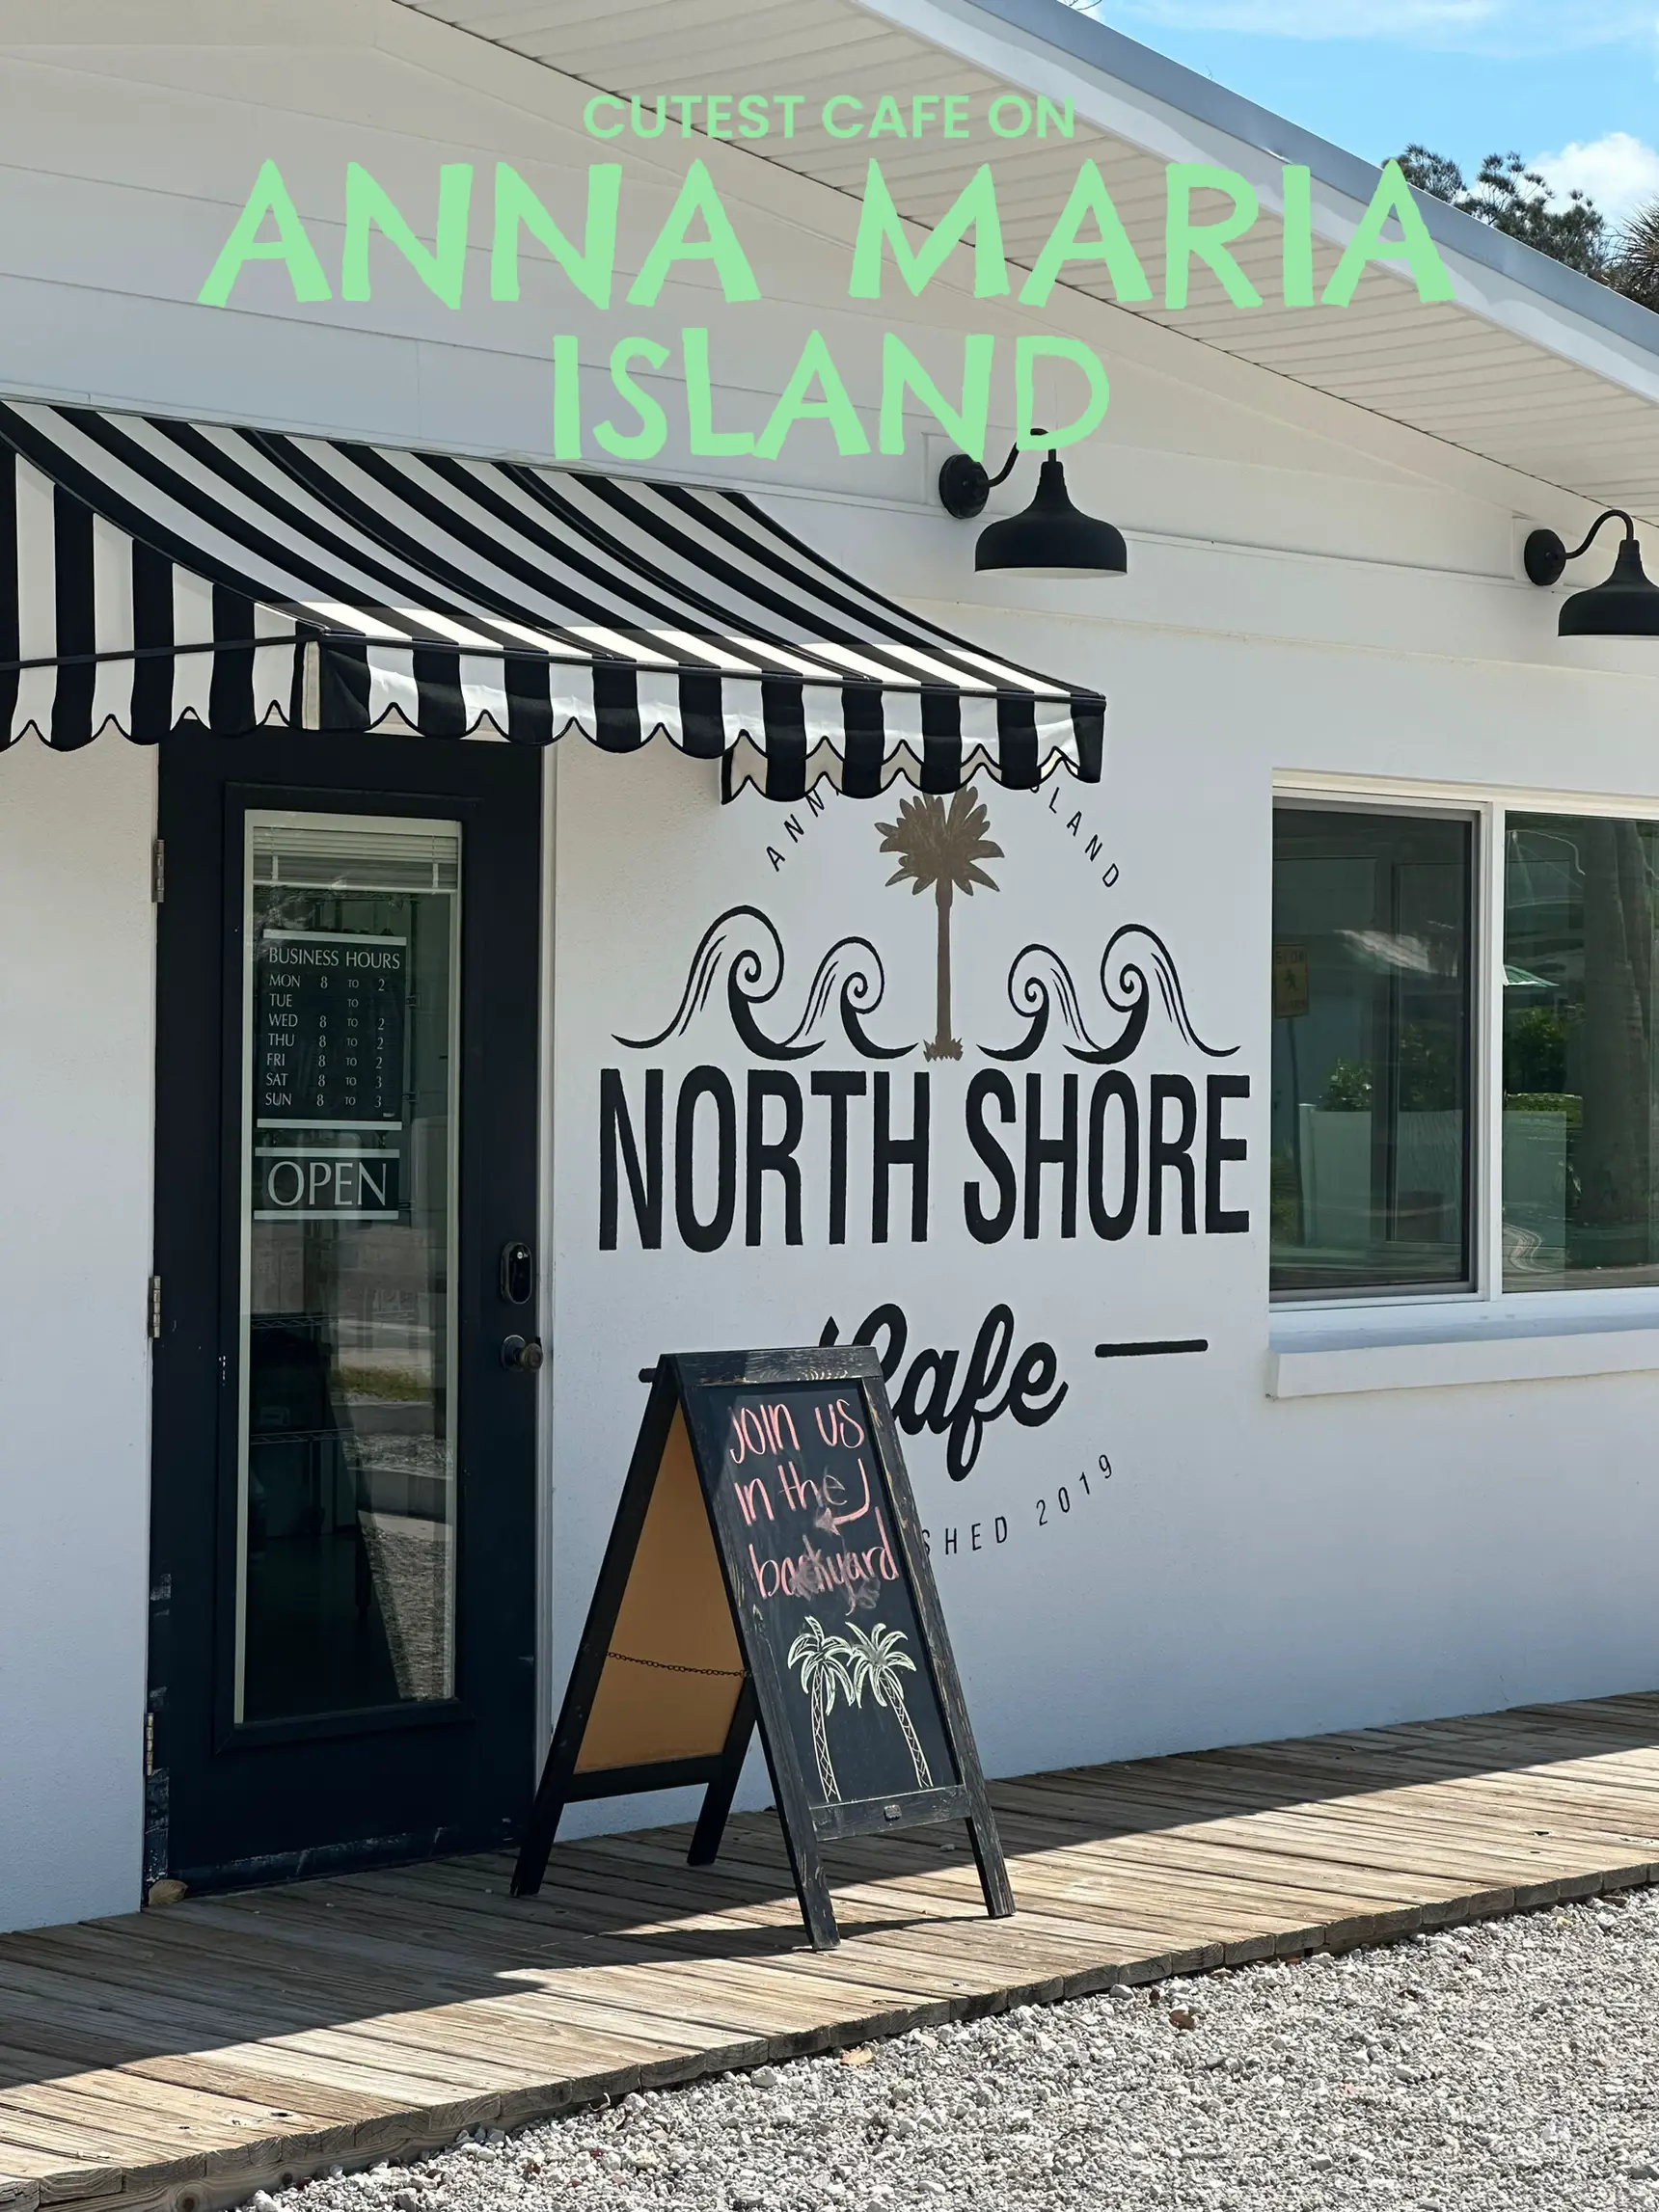 Cutest Cafe on Anna Maria Island, FL's images